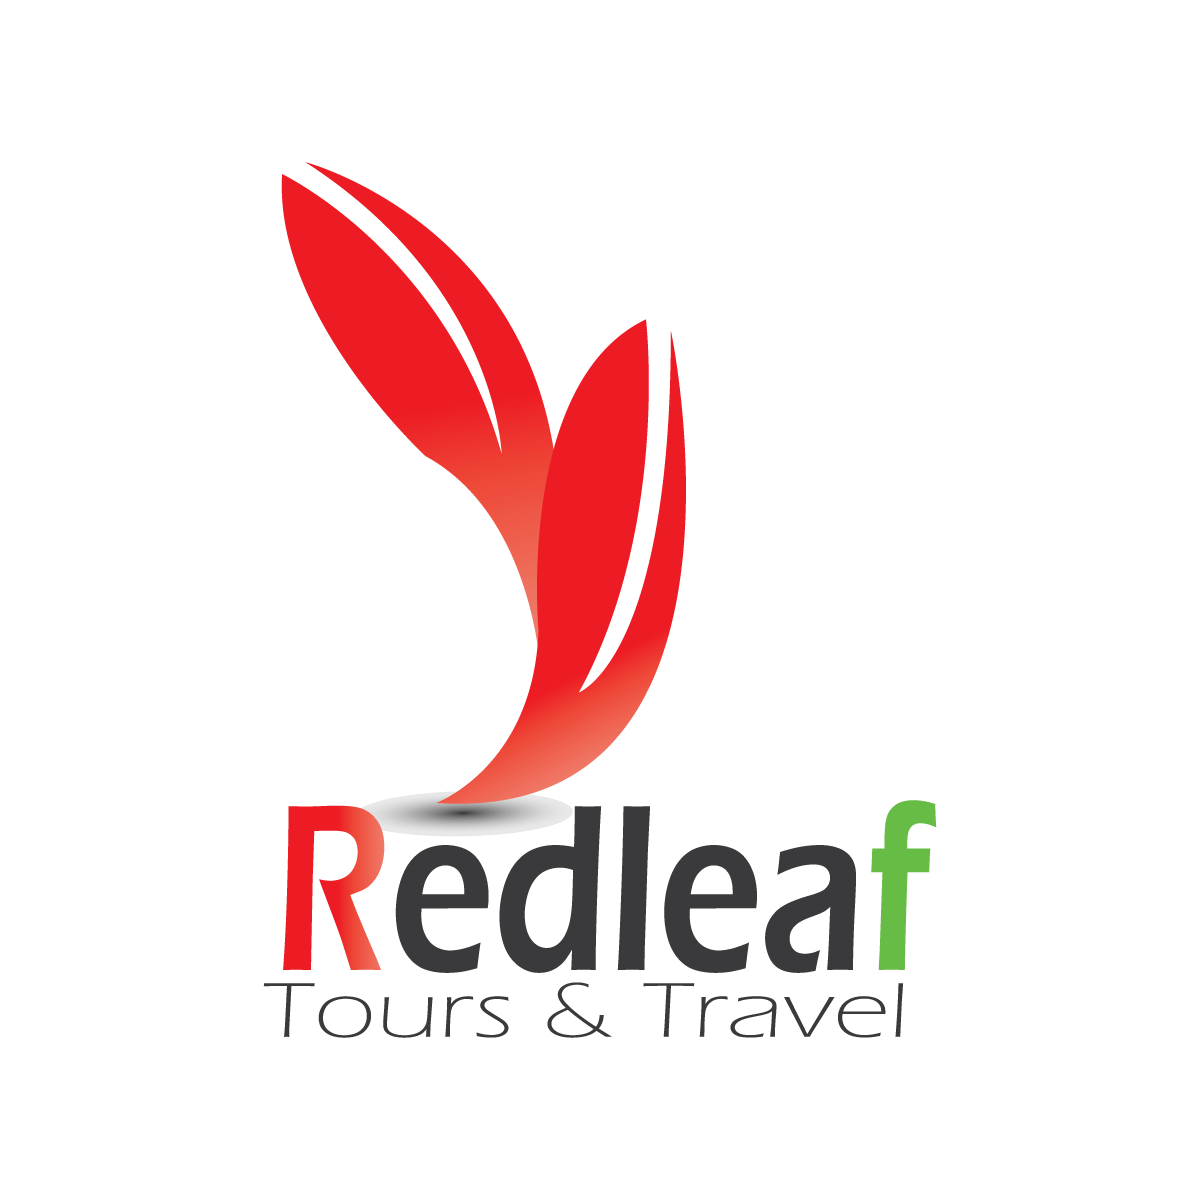 Red Travel Logo - Trusted Travel Partner